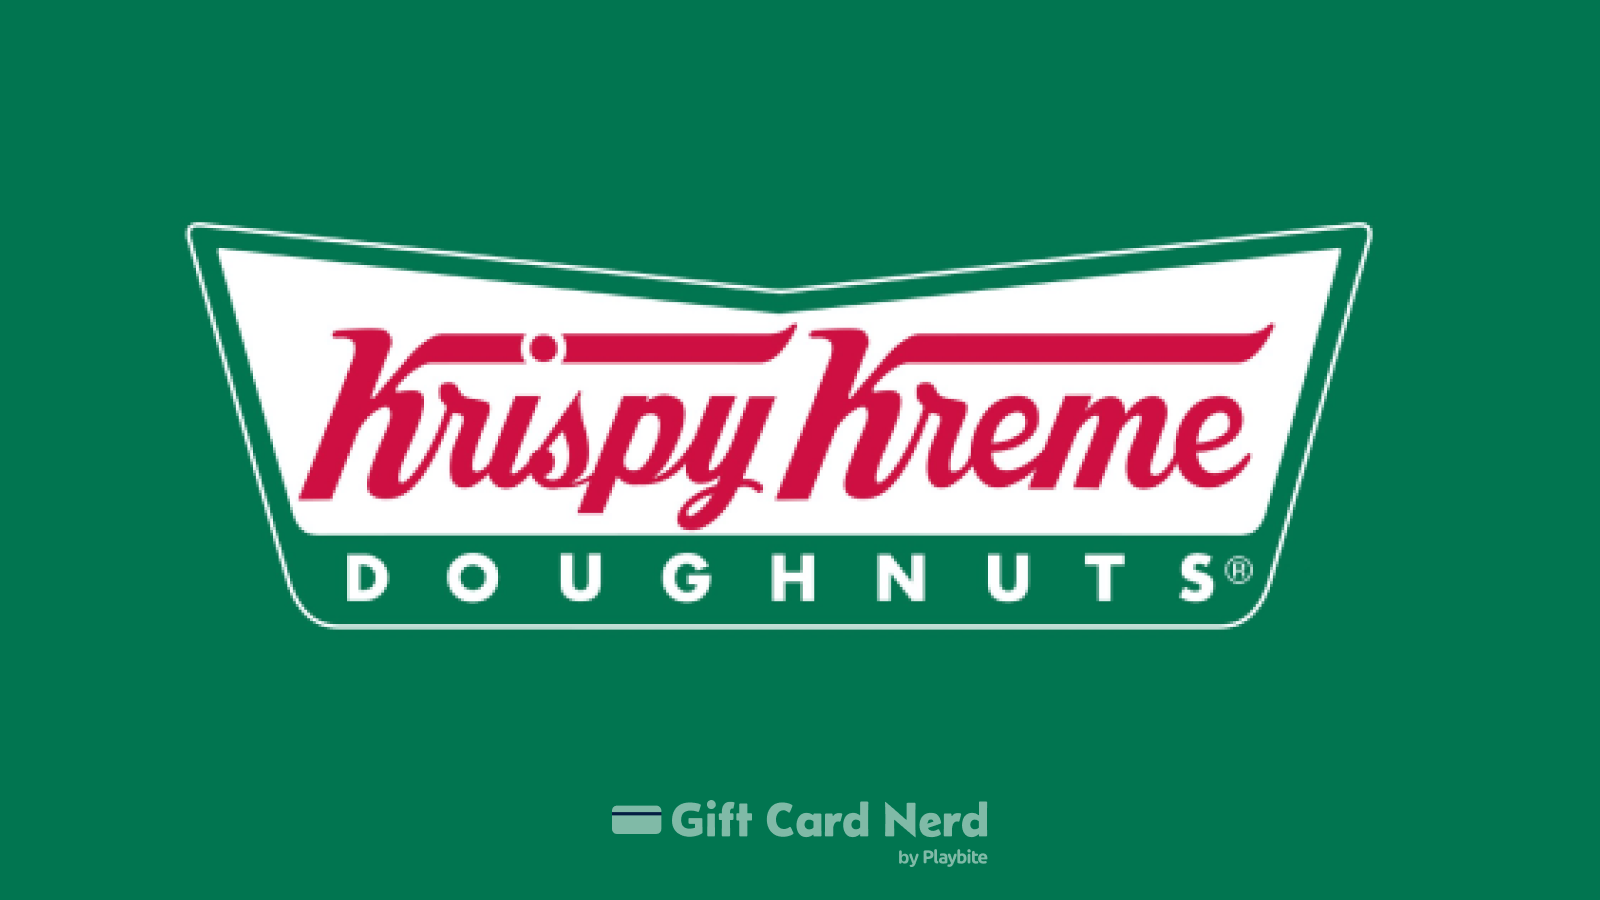 Can I Use a Krispy Kreme Gift Card on Cash App?